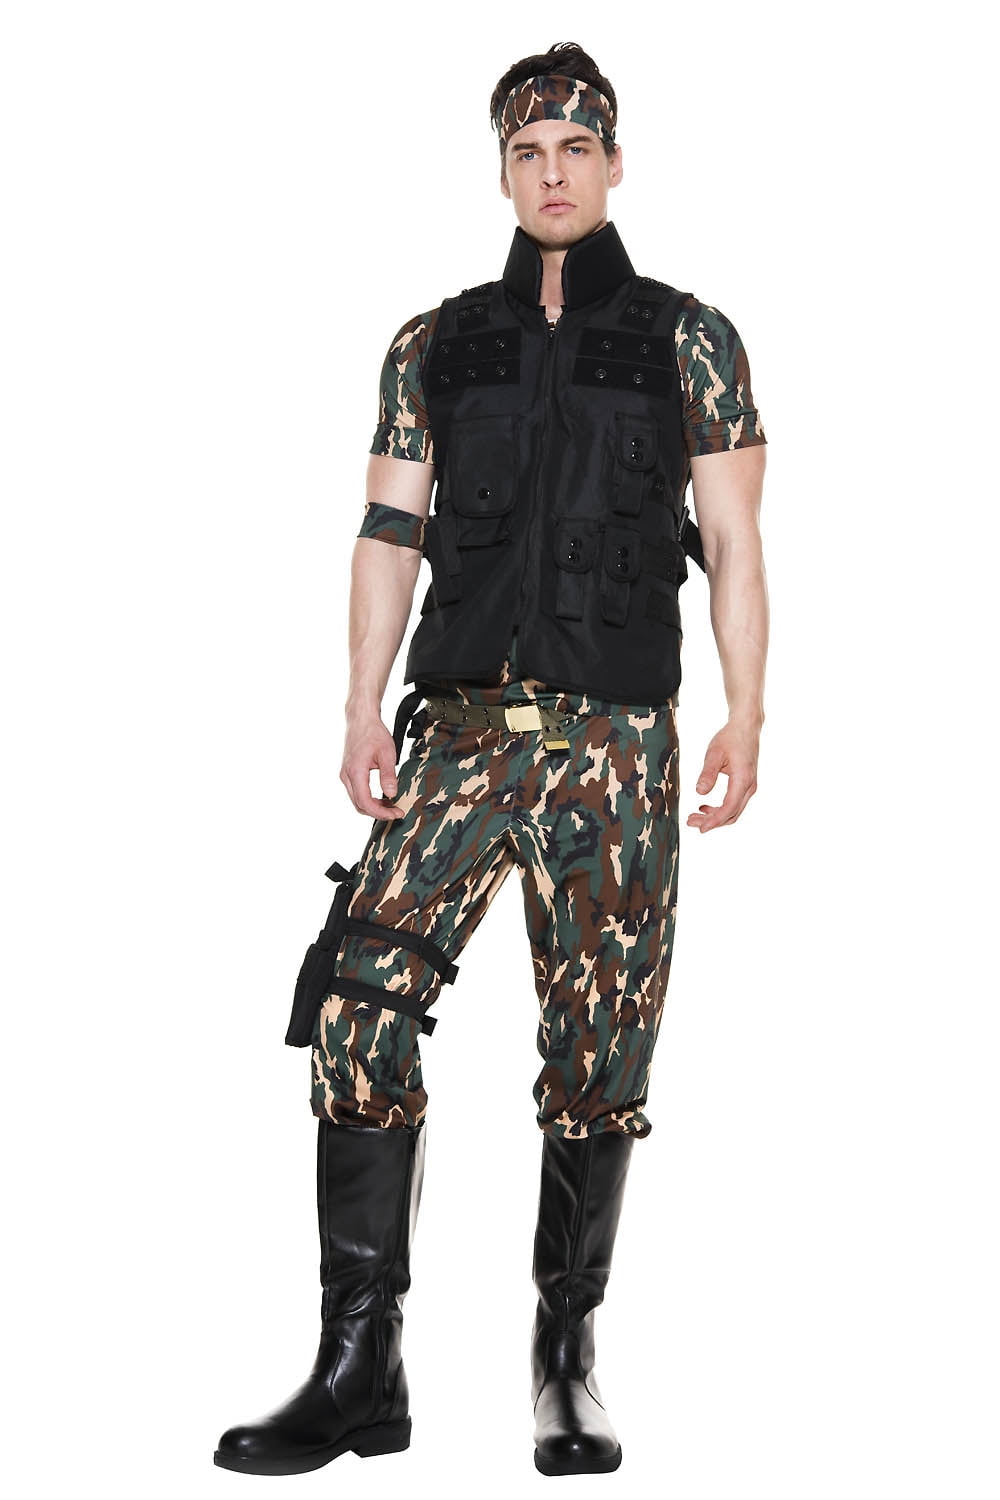 Army Soldier Costume 76649-L - Walmart.com - Walmart.com